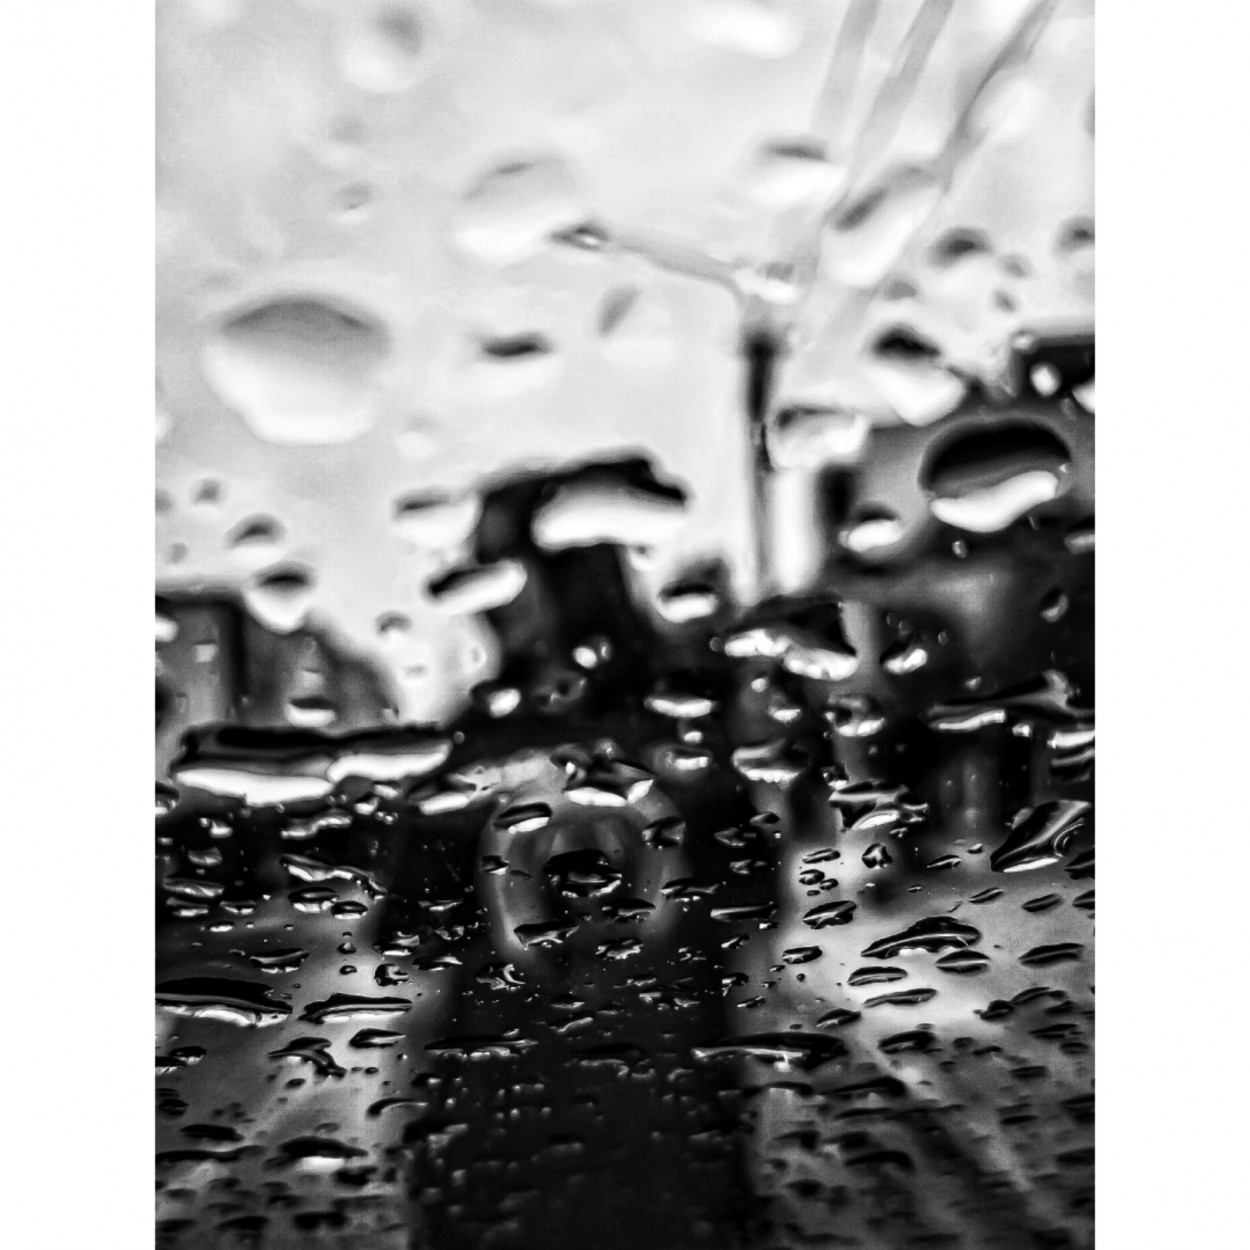 "La lluvia tiene un vago secreto de ternura" de Gabriel Rigal